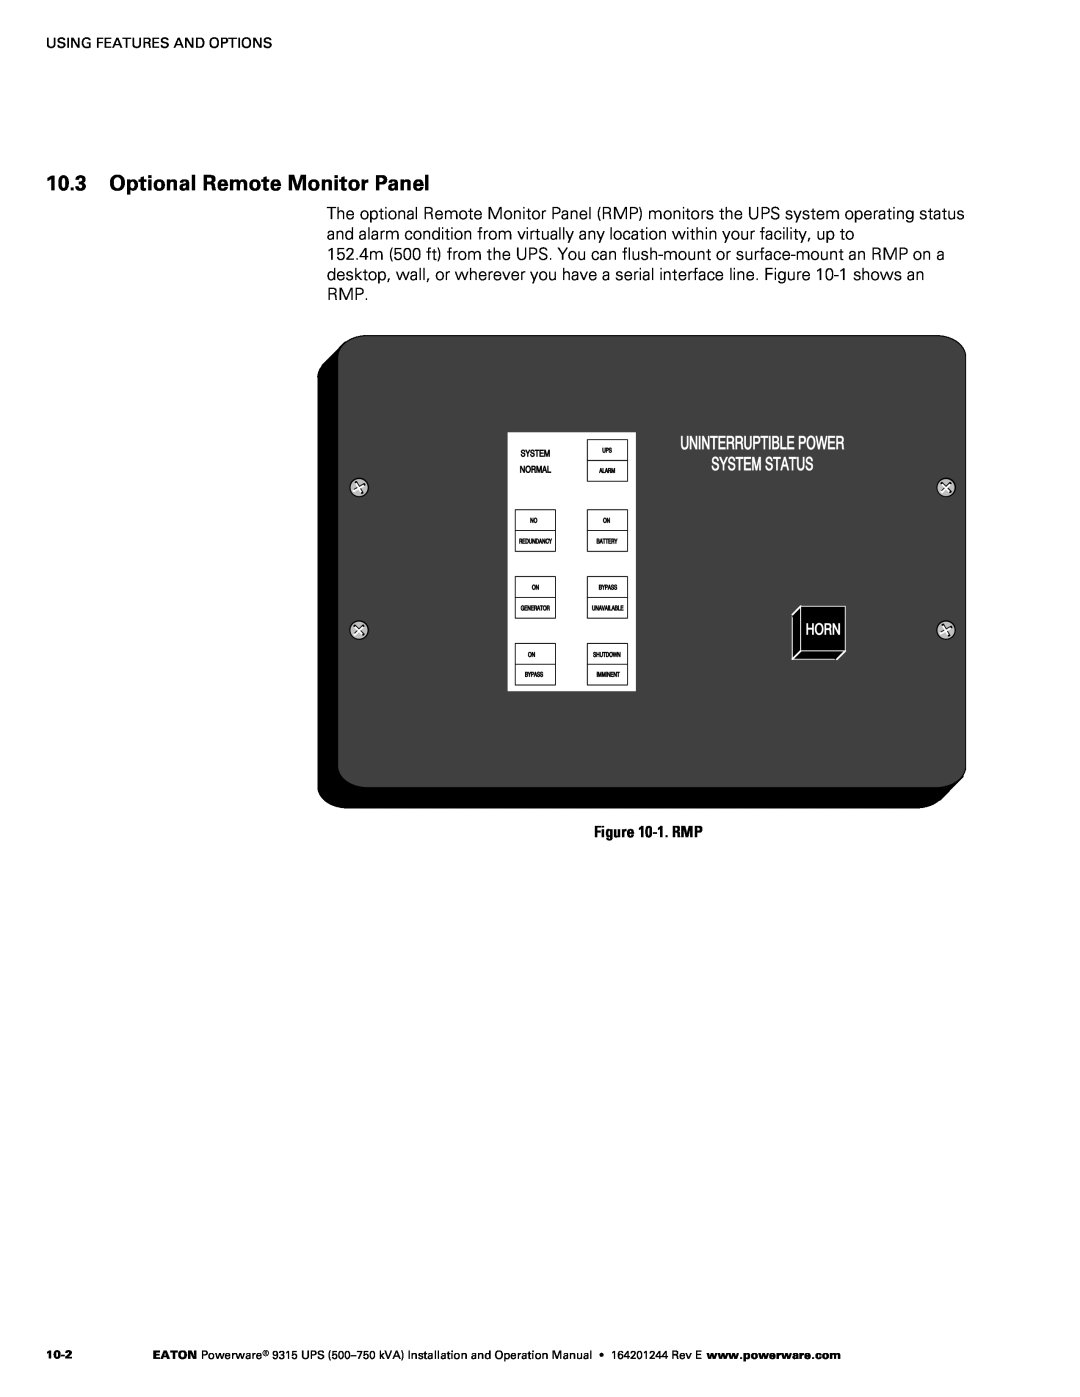 Powerware Powerware 9315 operation manual Optional Remote Monitor Panel, ‐1. RMP 